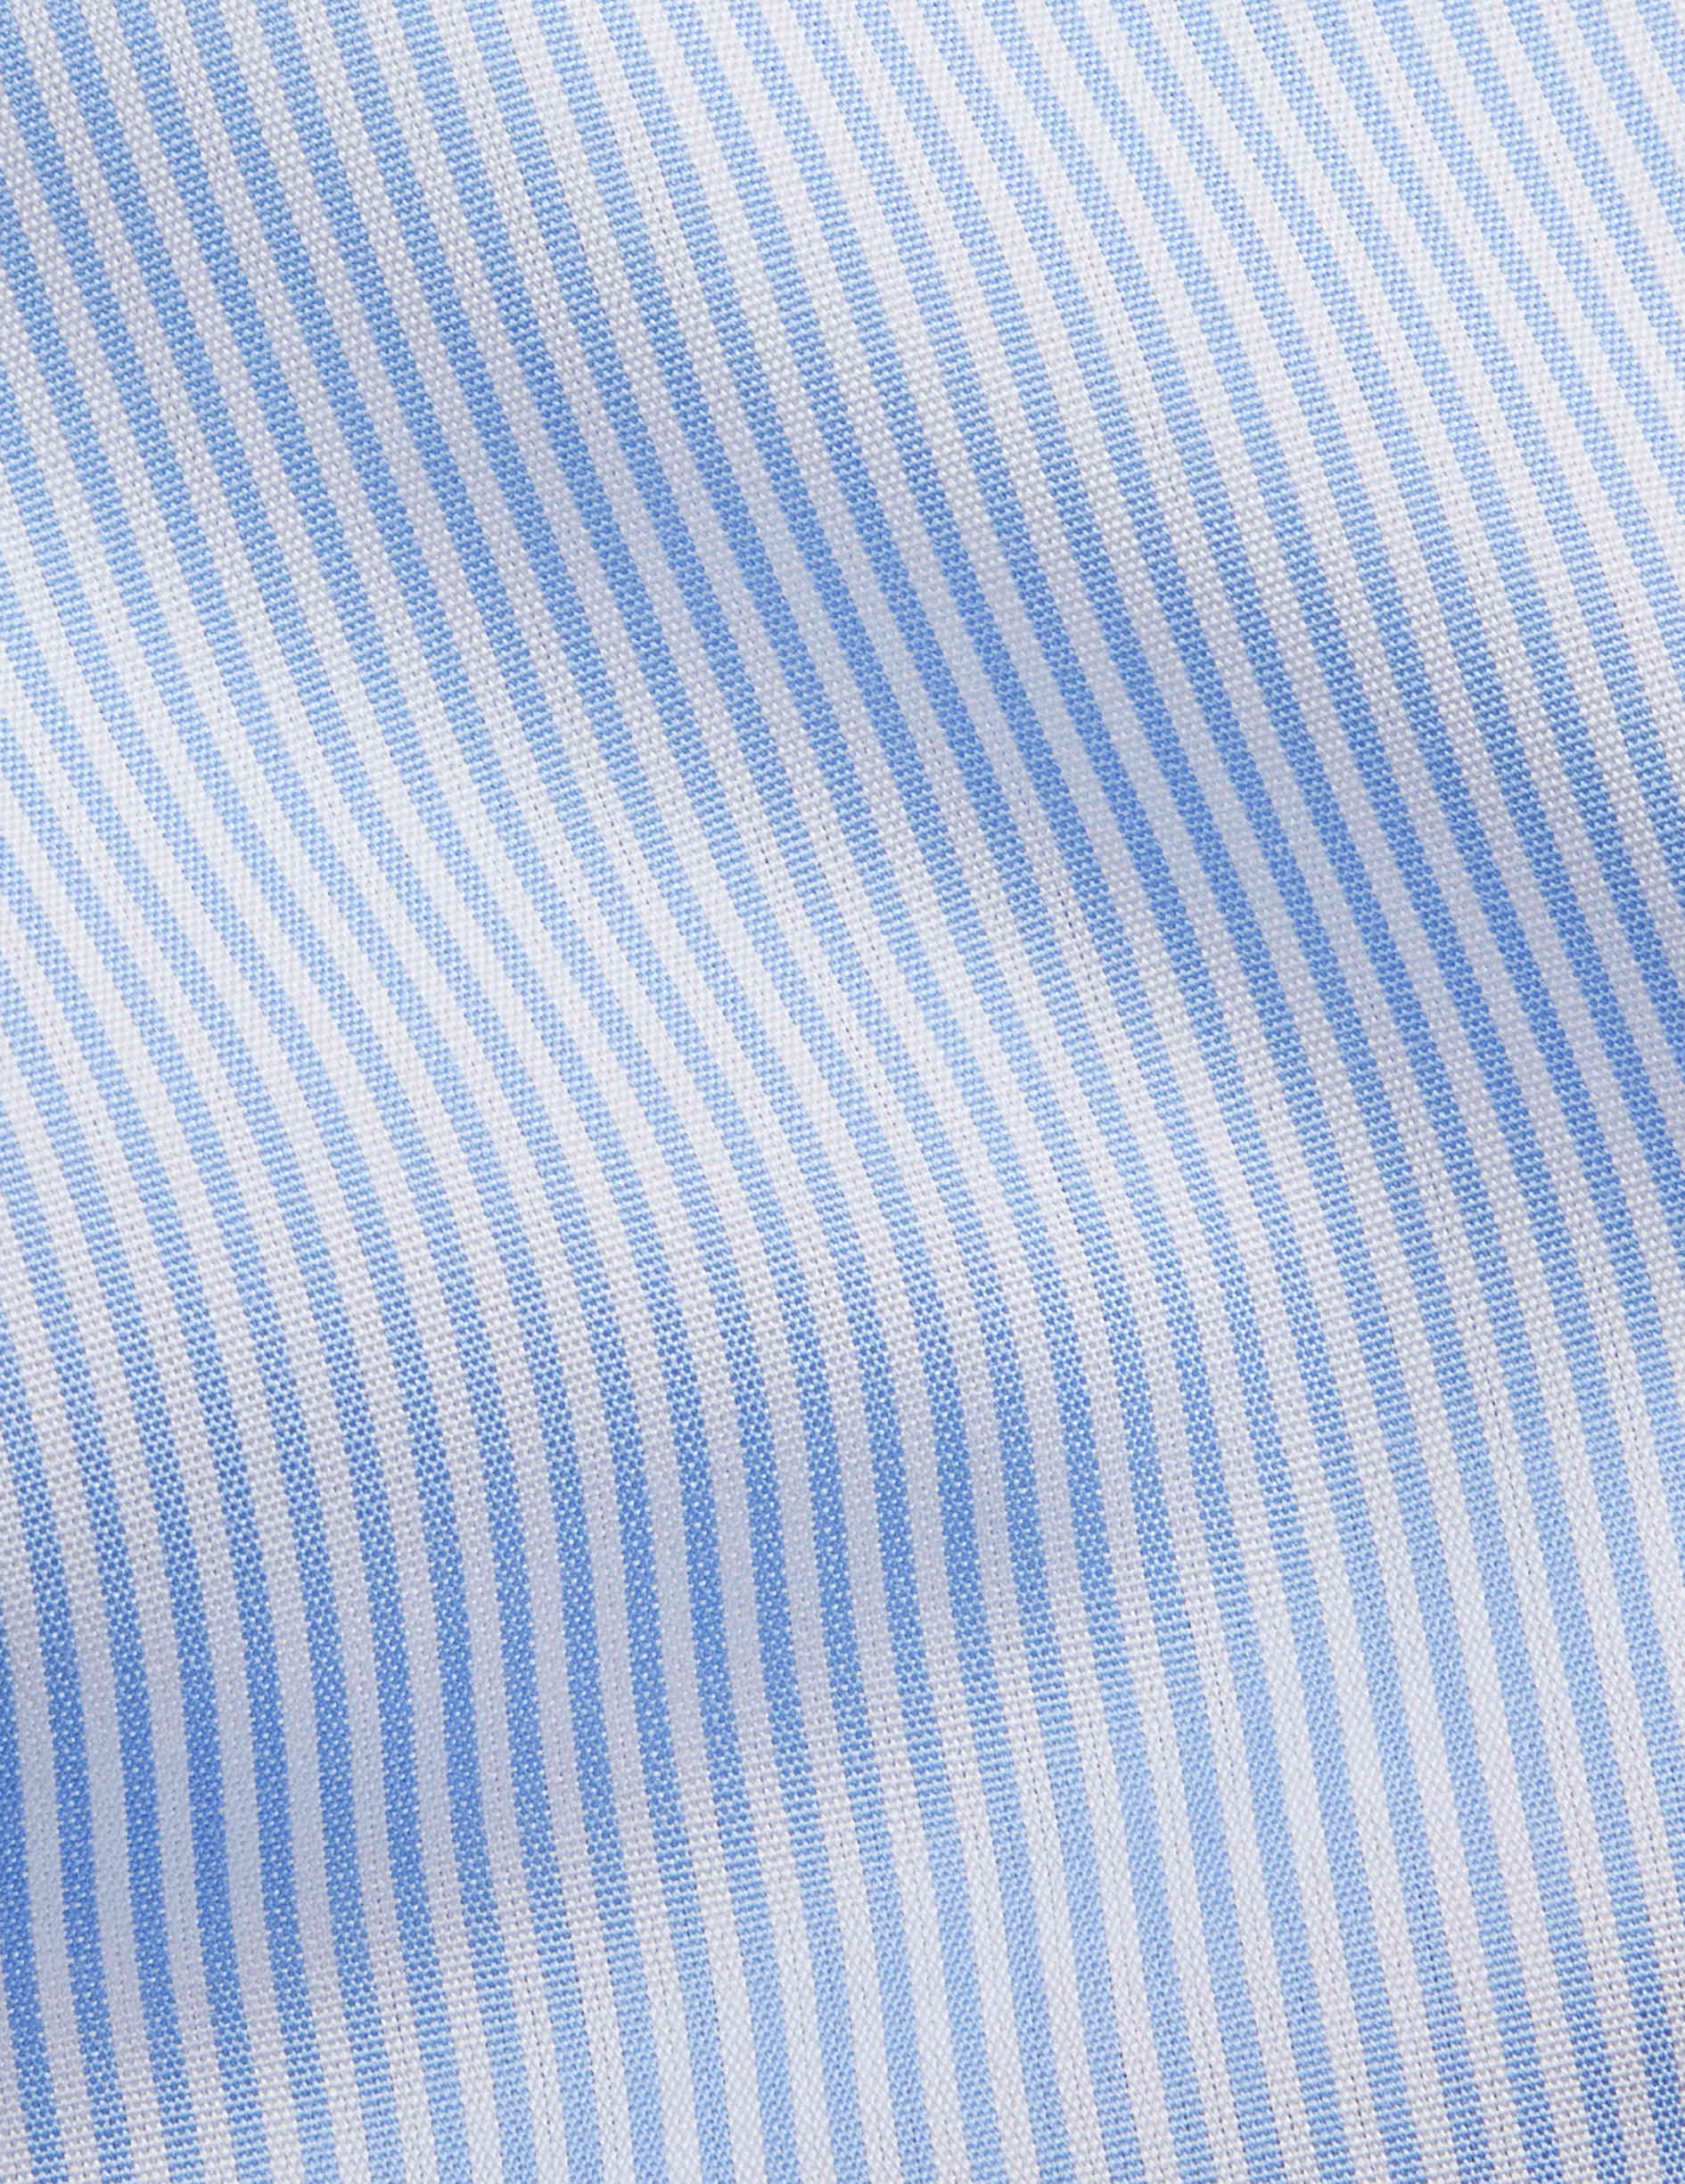 Semi-fitted blue striped shirt - Poplin - Figaret Collar